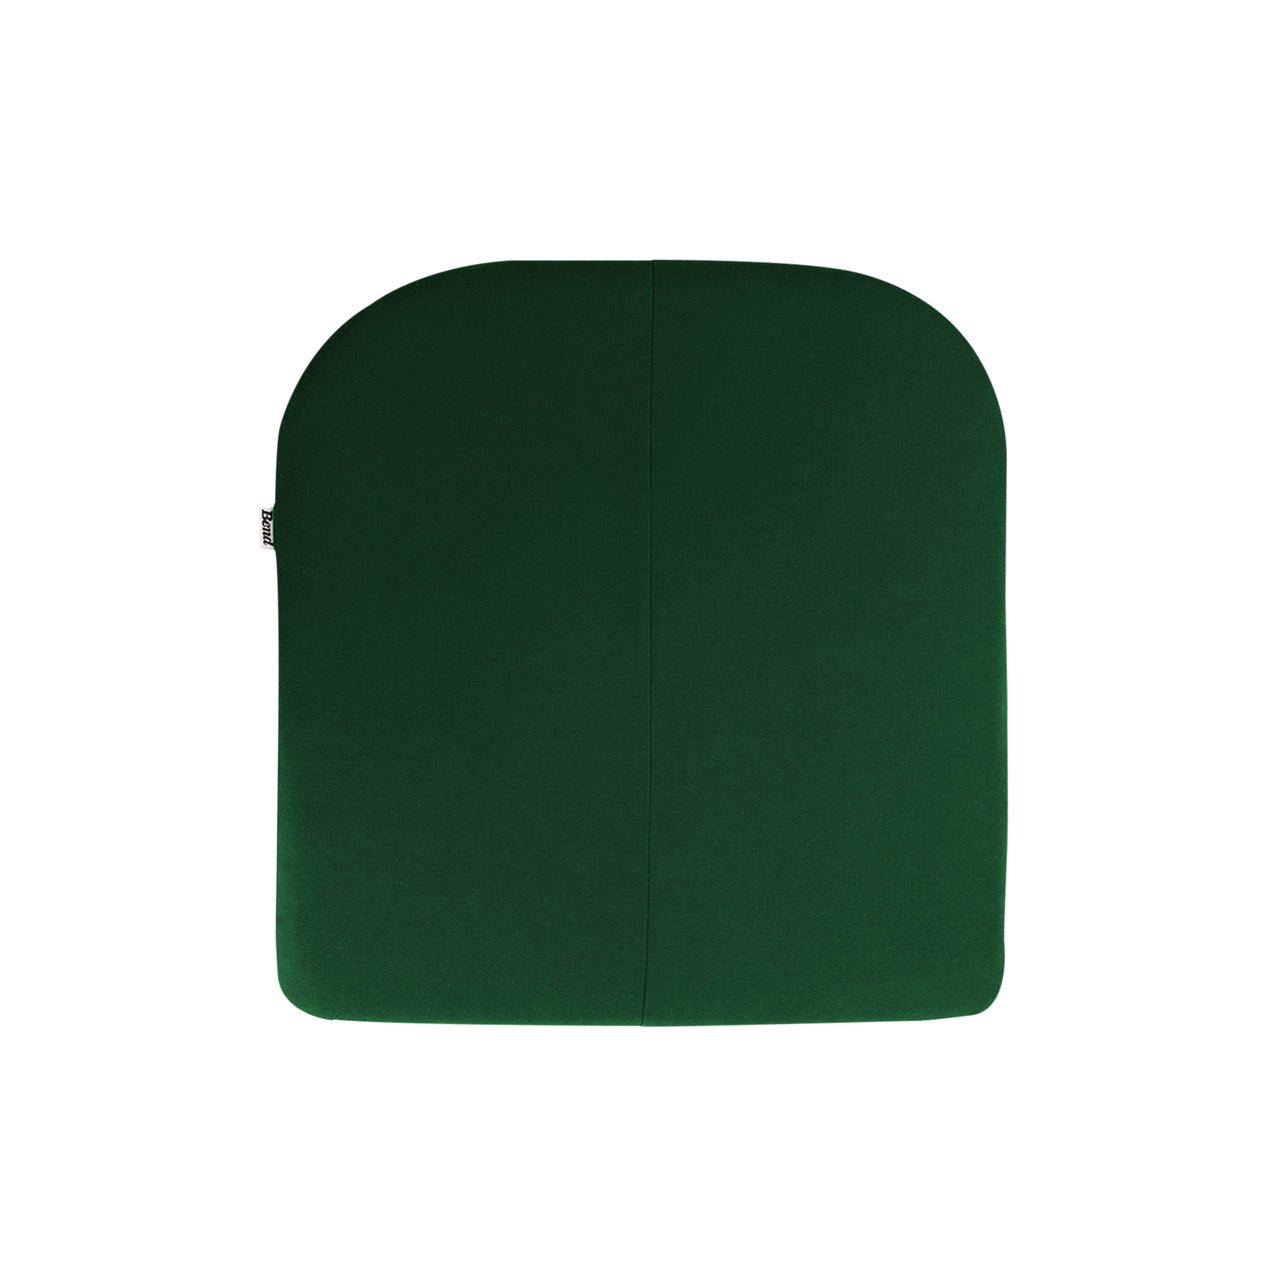 Sunbrella Seat Pad: Forest Green